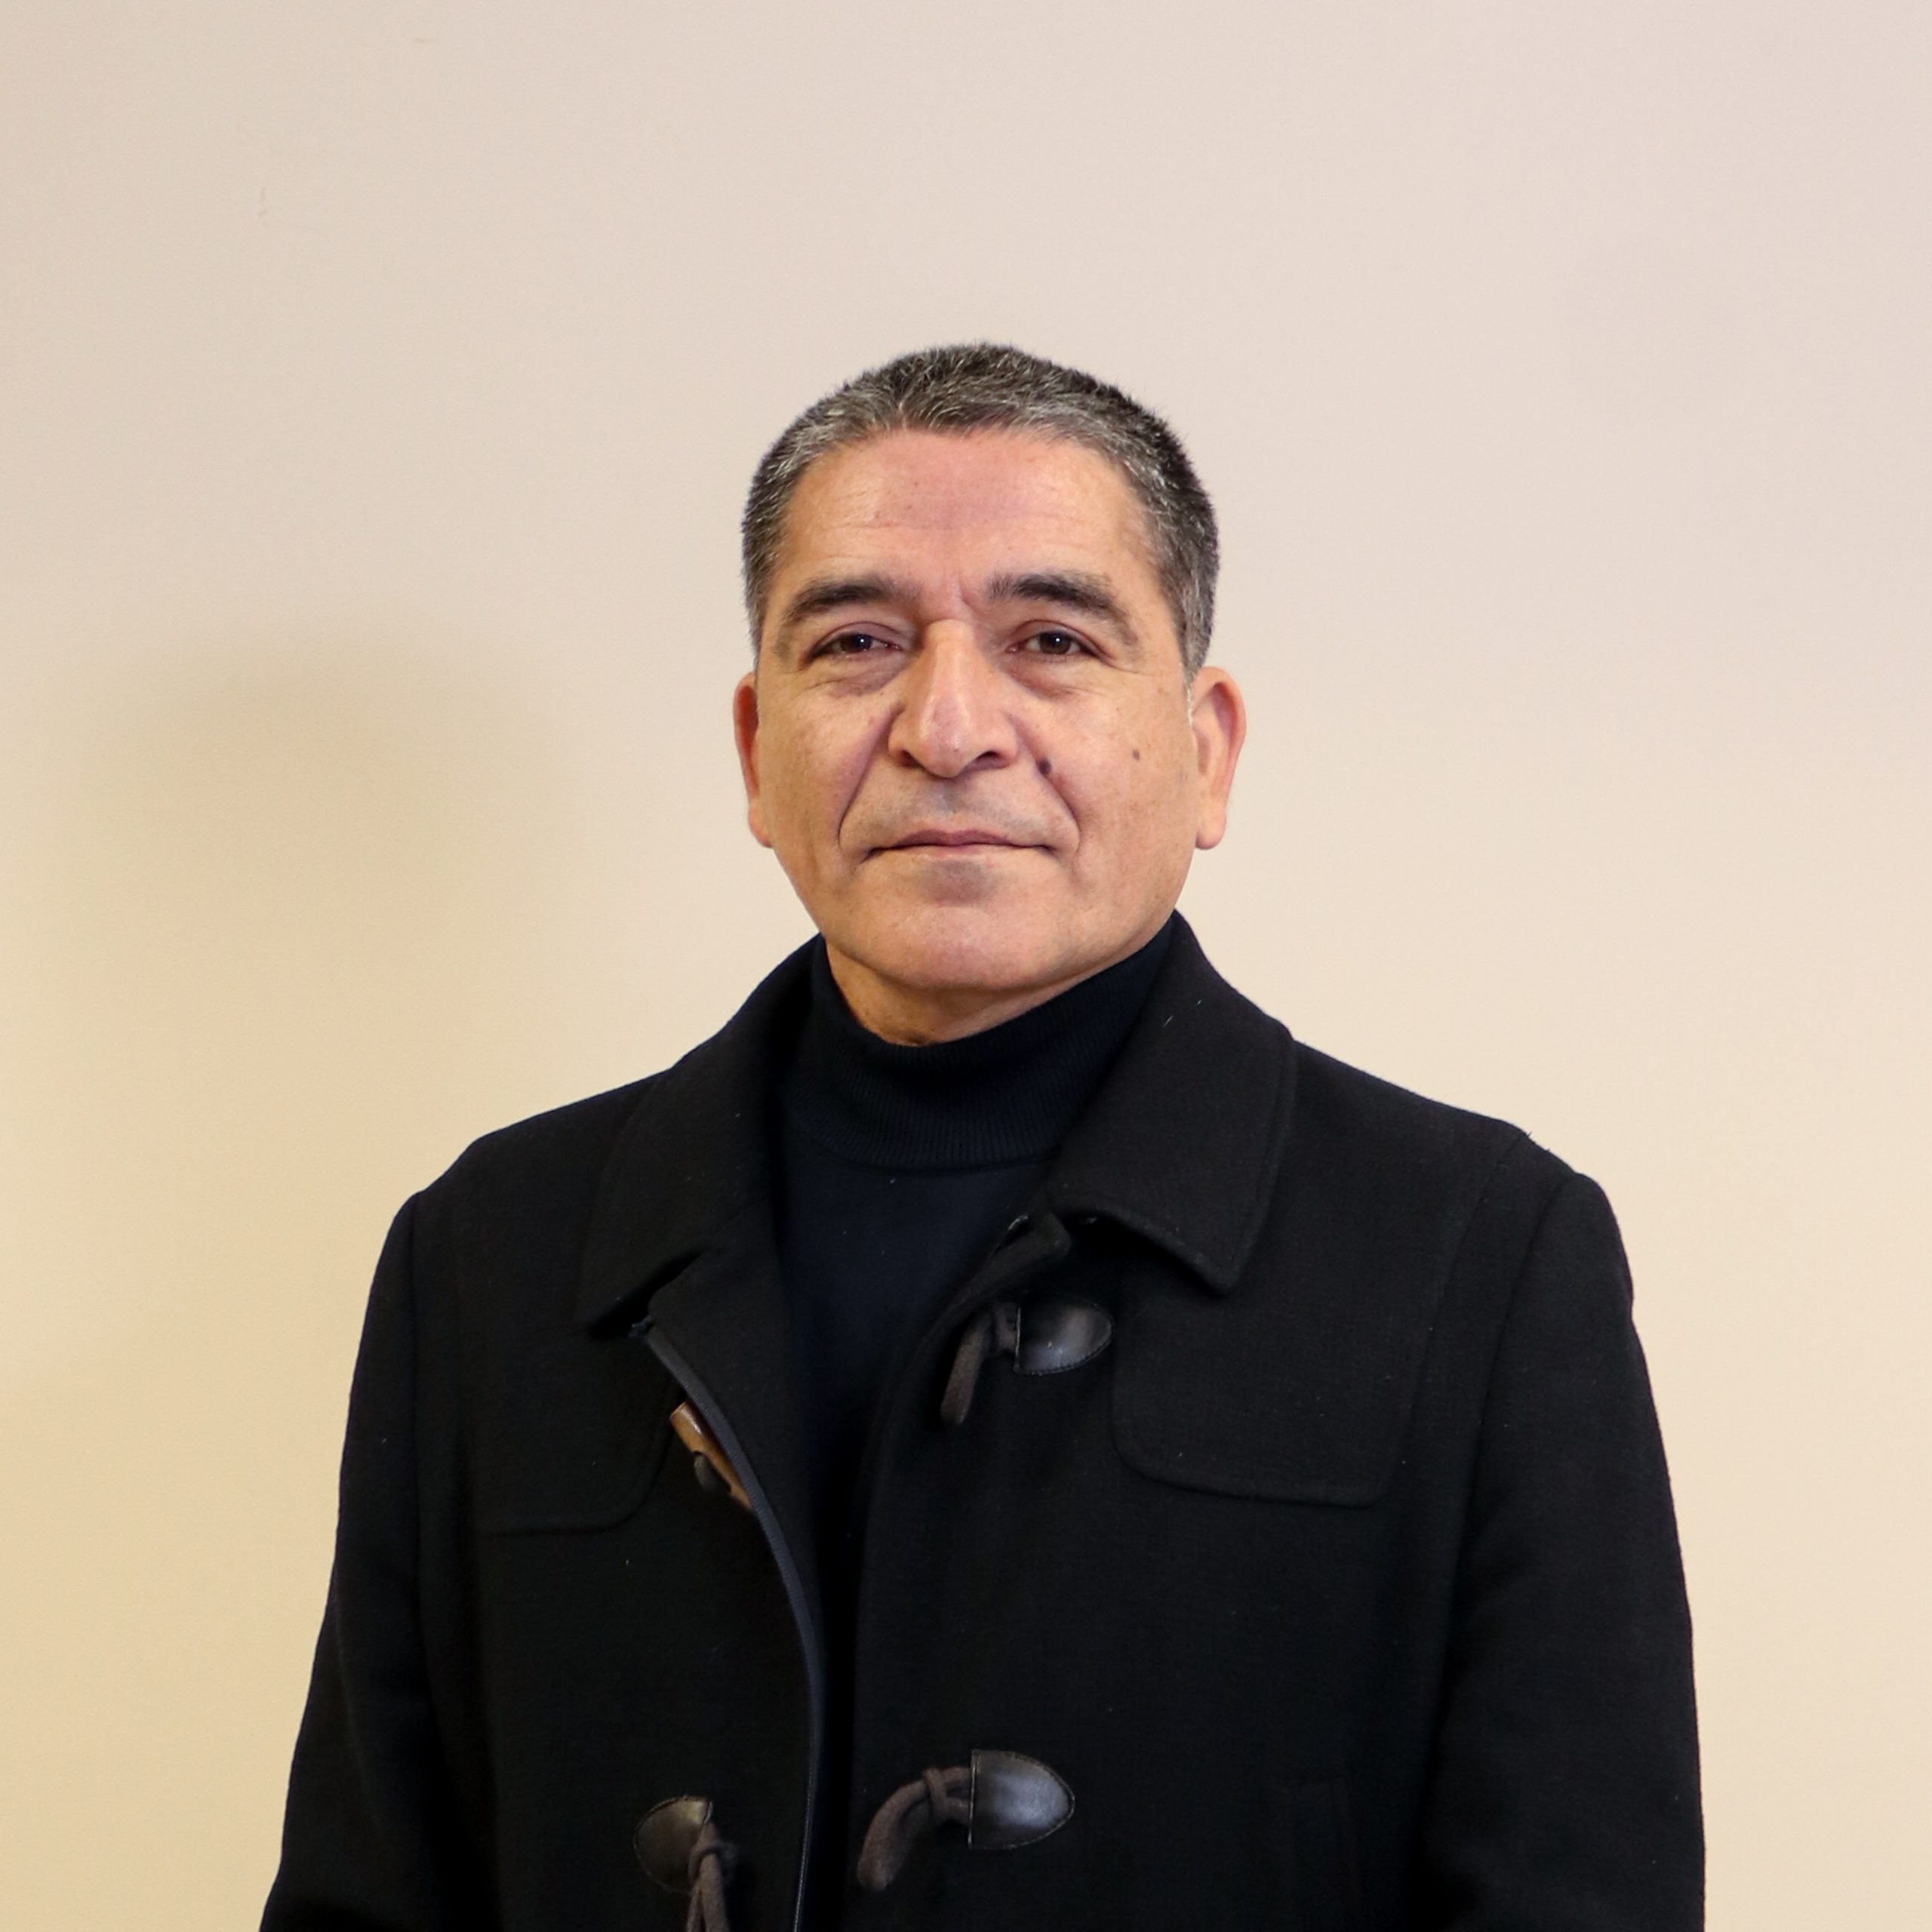 Juan Esteban Reyes Parra